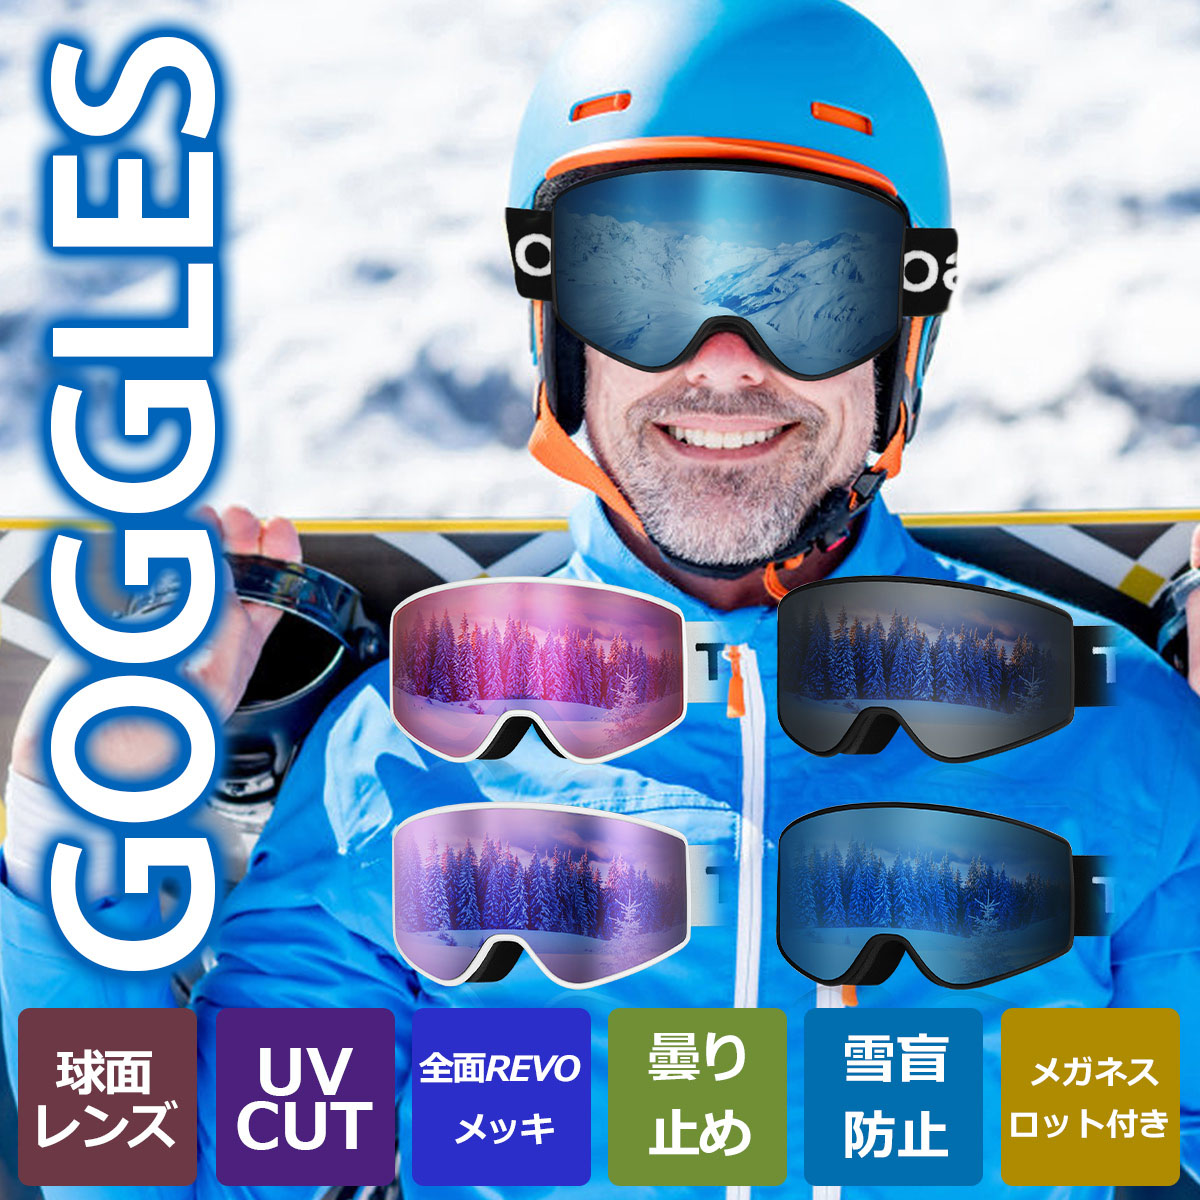 TOYOSO スキーゴーグル 4色 曇り止め 広視野レンズ OTG スノーゴーグル